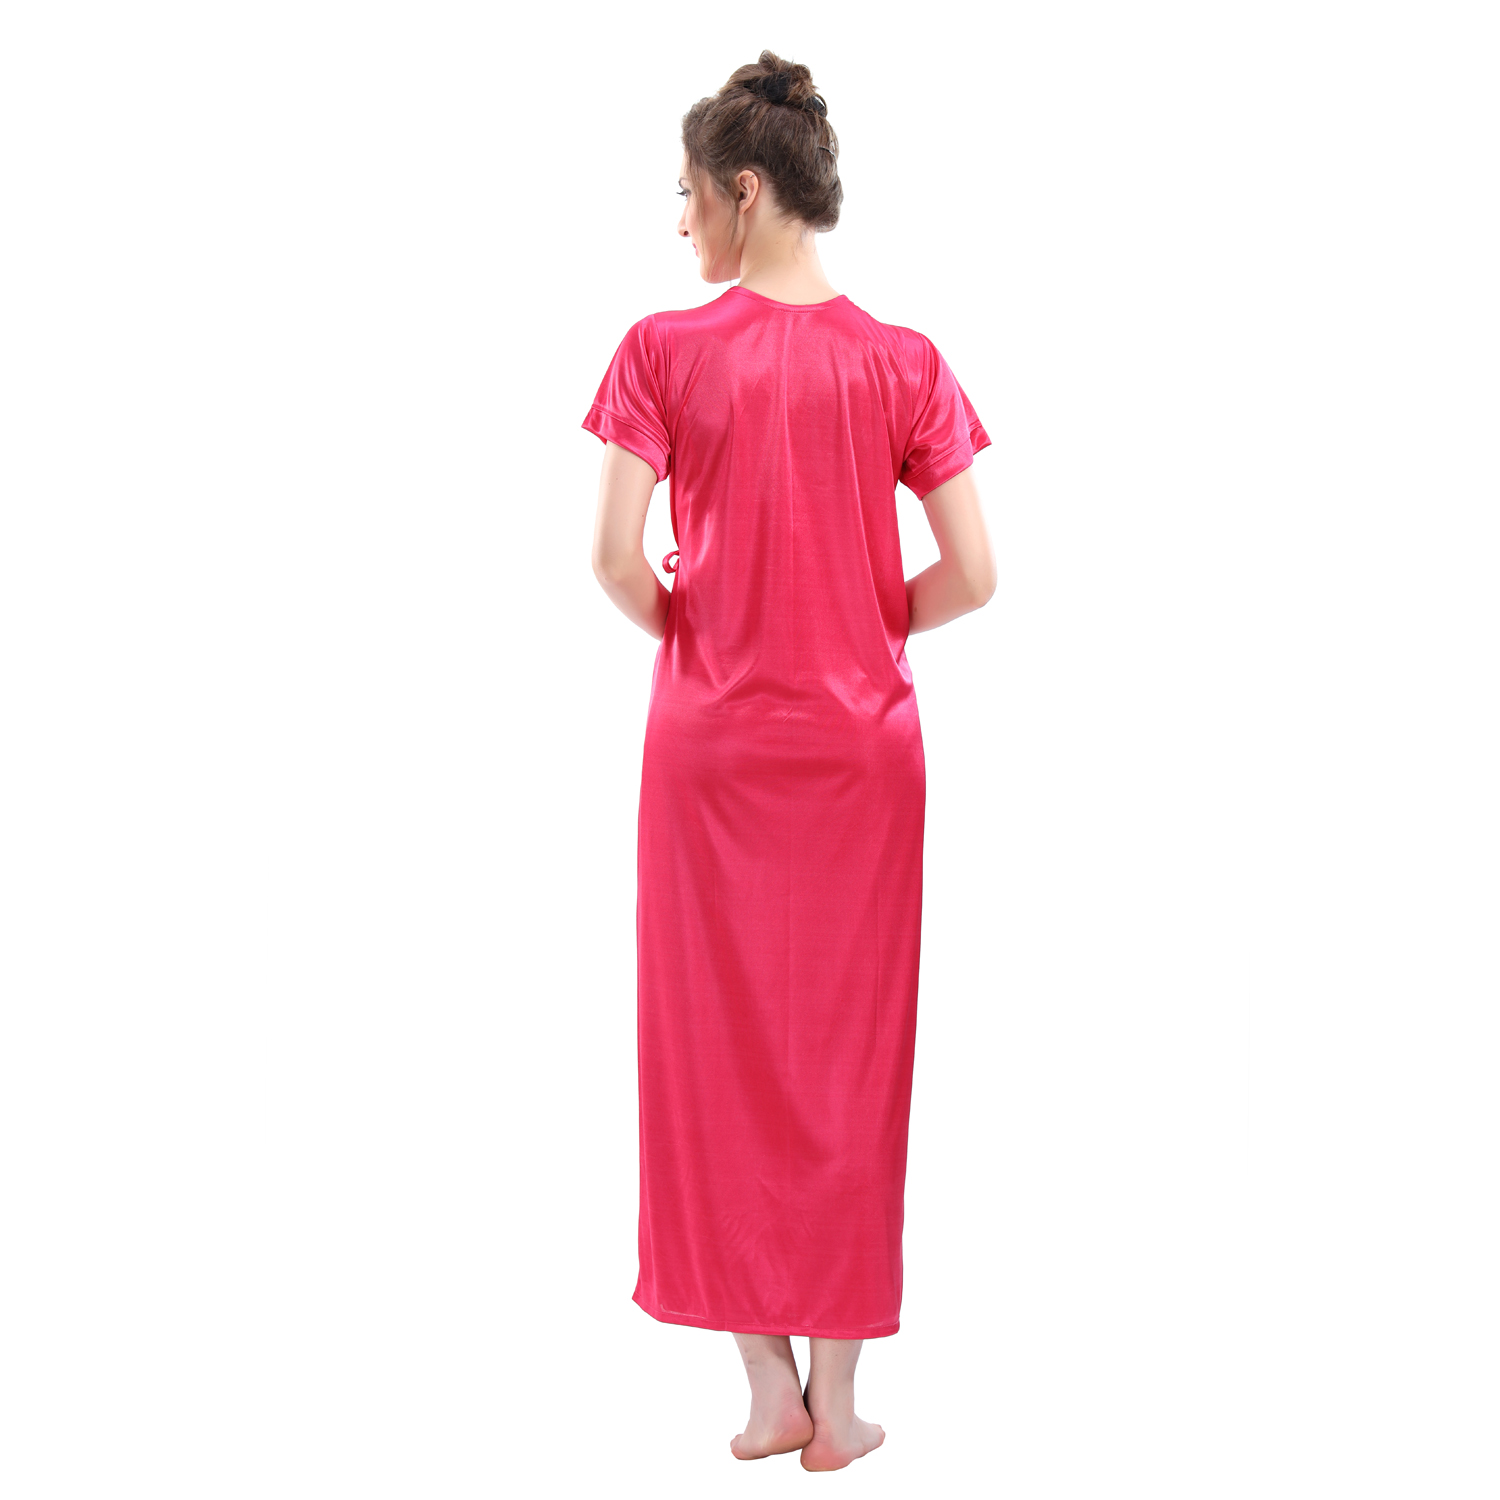 Buy Juliana Dream Pink Nightwear Set Nighty And Robe Online ₹699 From Shopclues 